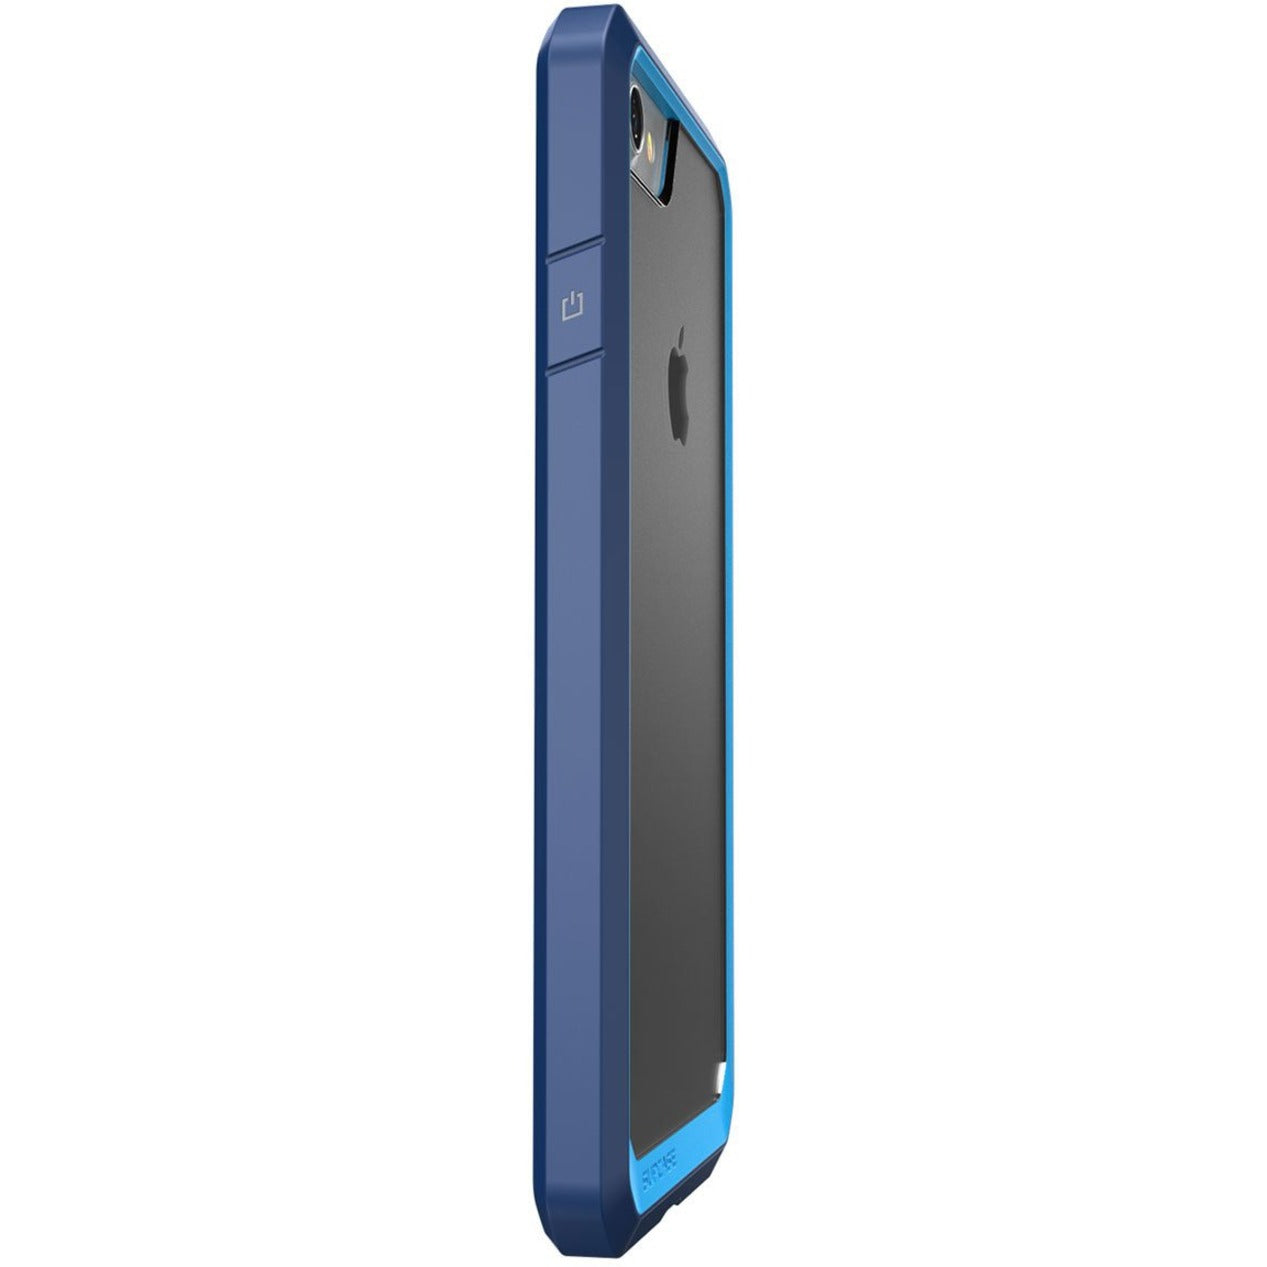 i-Blason Unicorn Beetle Style Carrying Case (Holster) Apple iPhone 8 Smartphone - Blue